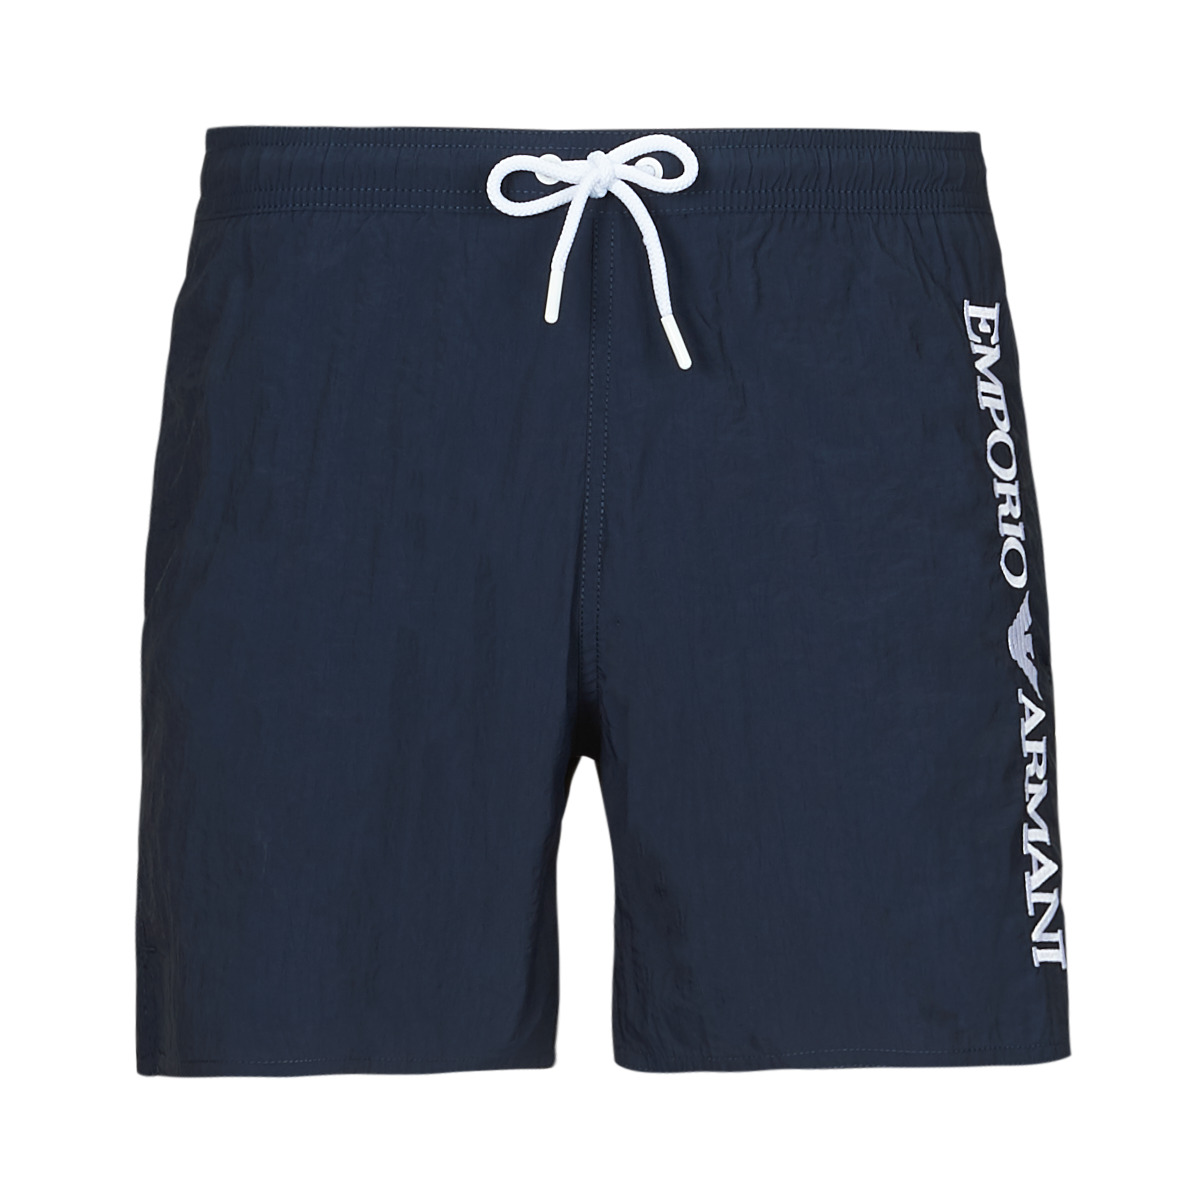 Vêtements Homme Maillots / Shorts de bain Emporio acqua Armani EMBROIDERY LOGO Marine